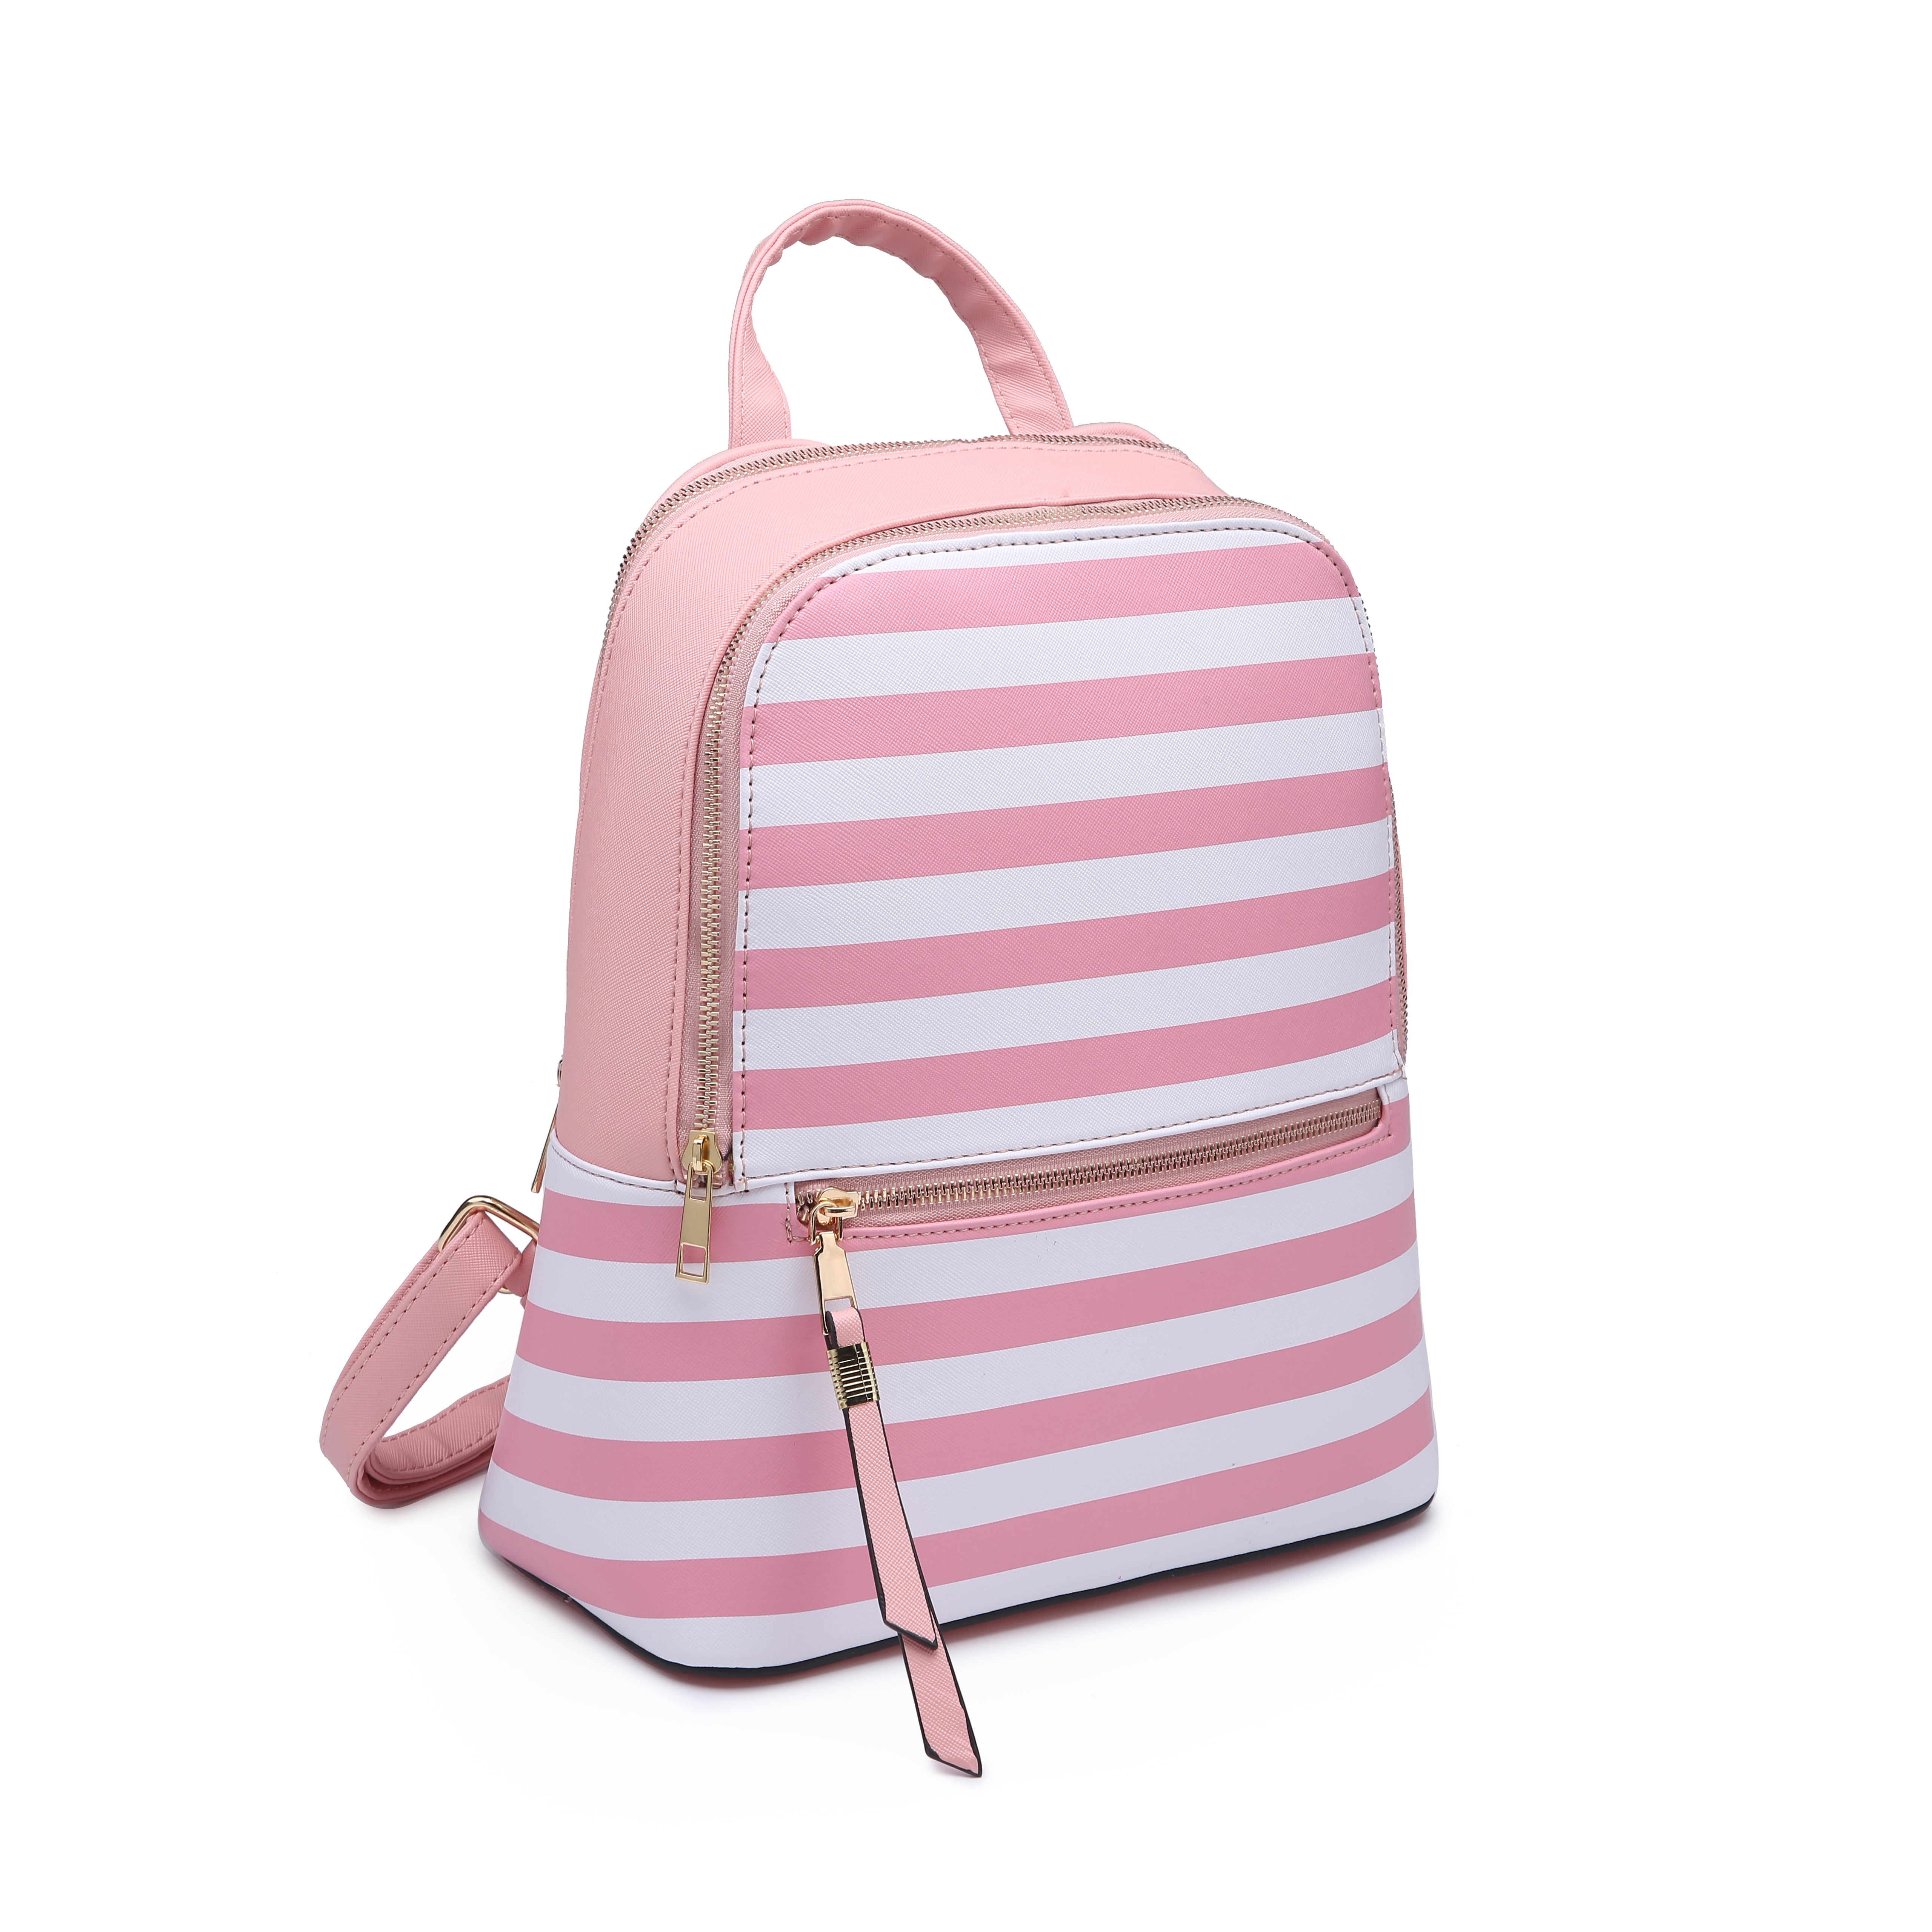 Women PU Leather Fashion Backpack Purse Colorful Stripes Travel School Shoulder Bag Girls Ladies Daypack Handbags 